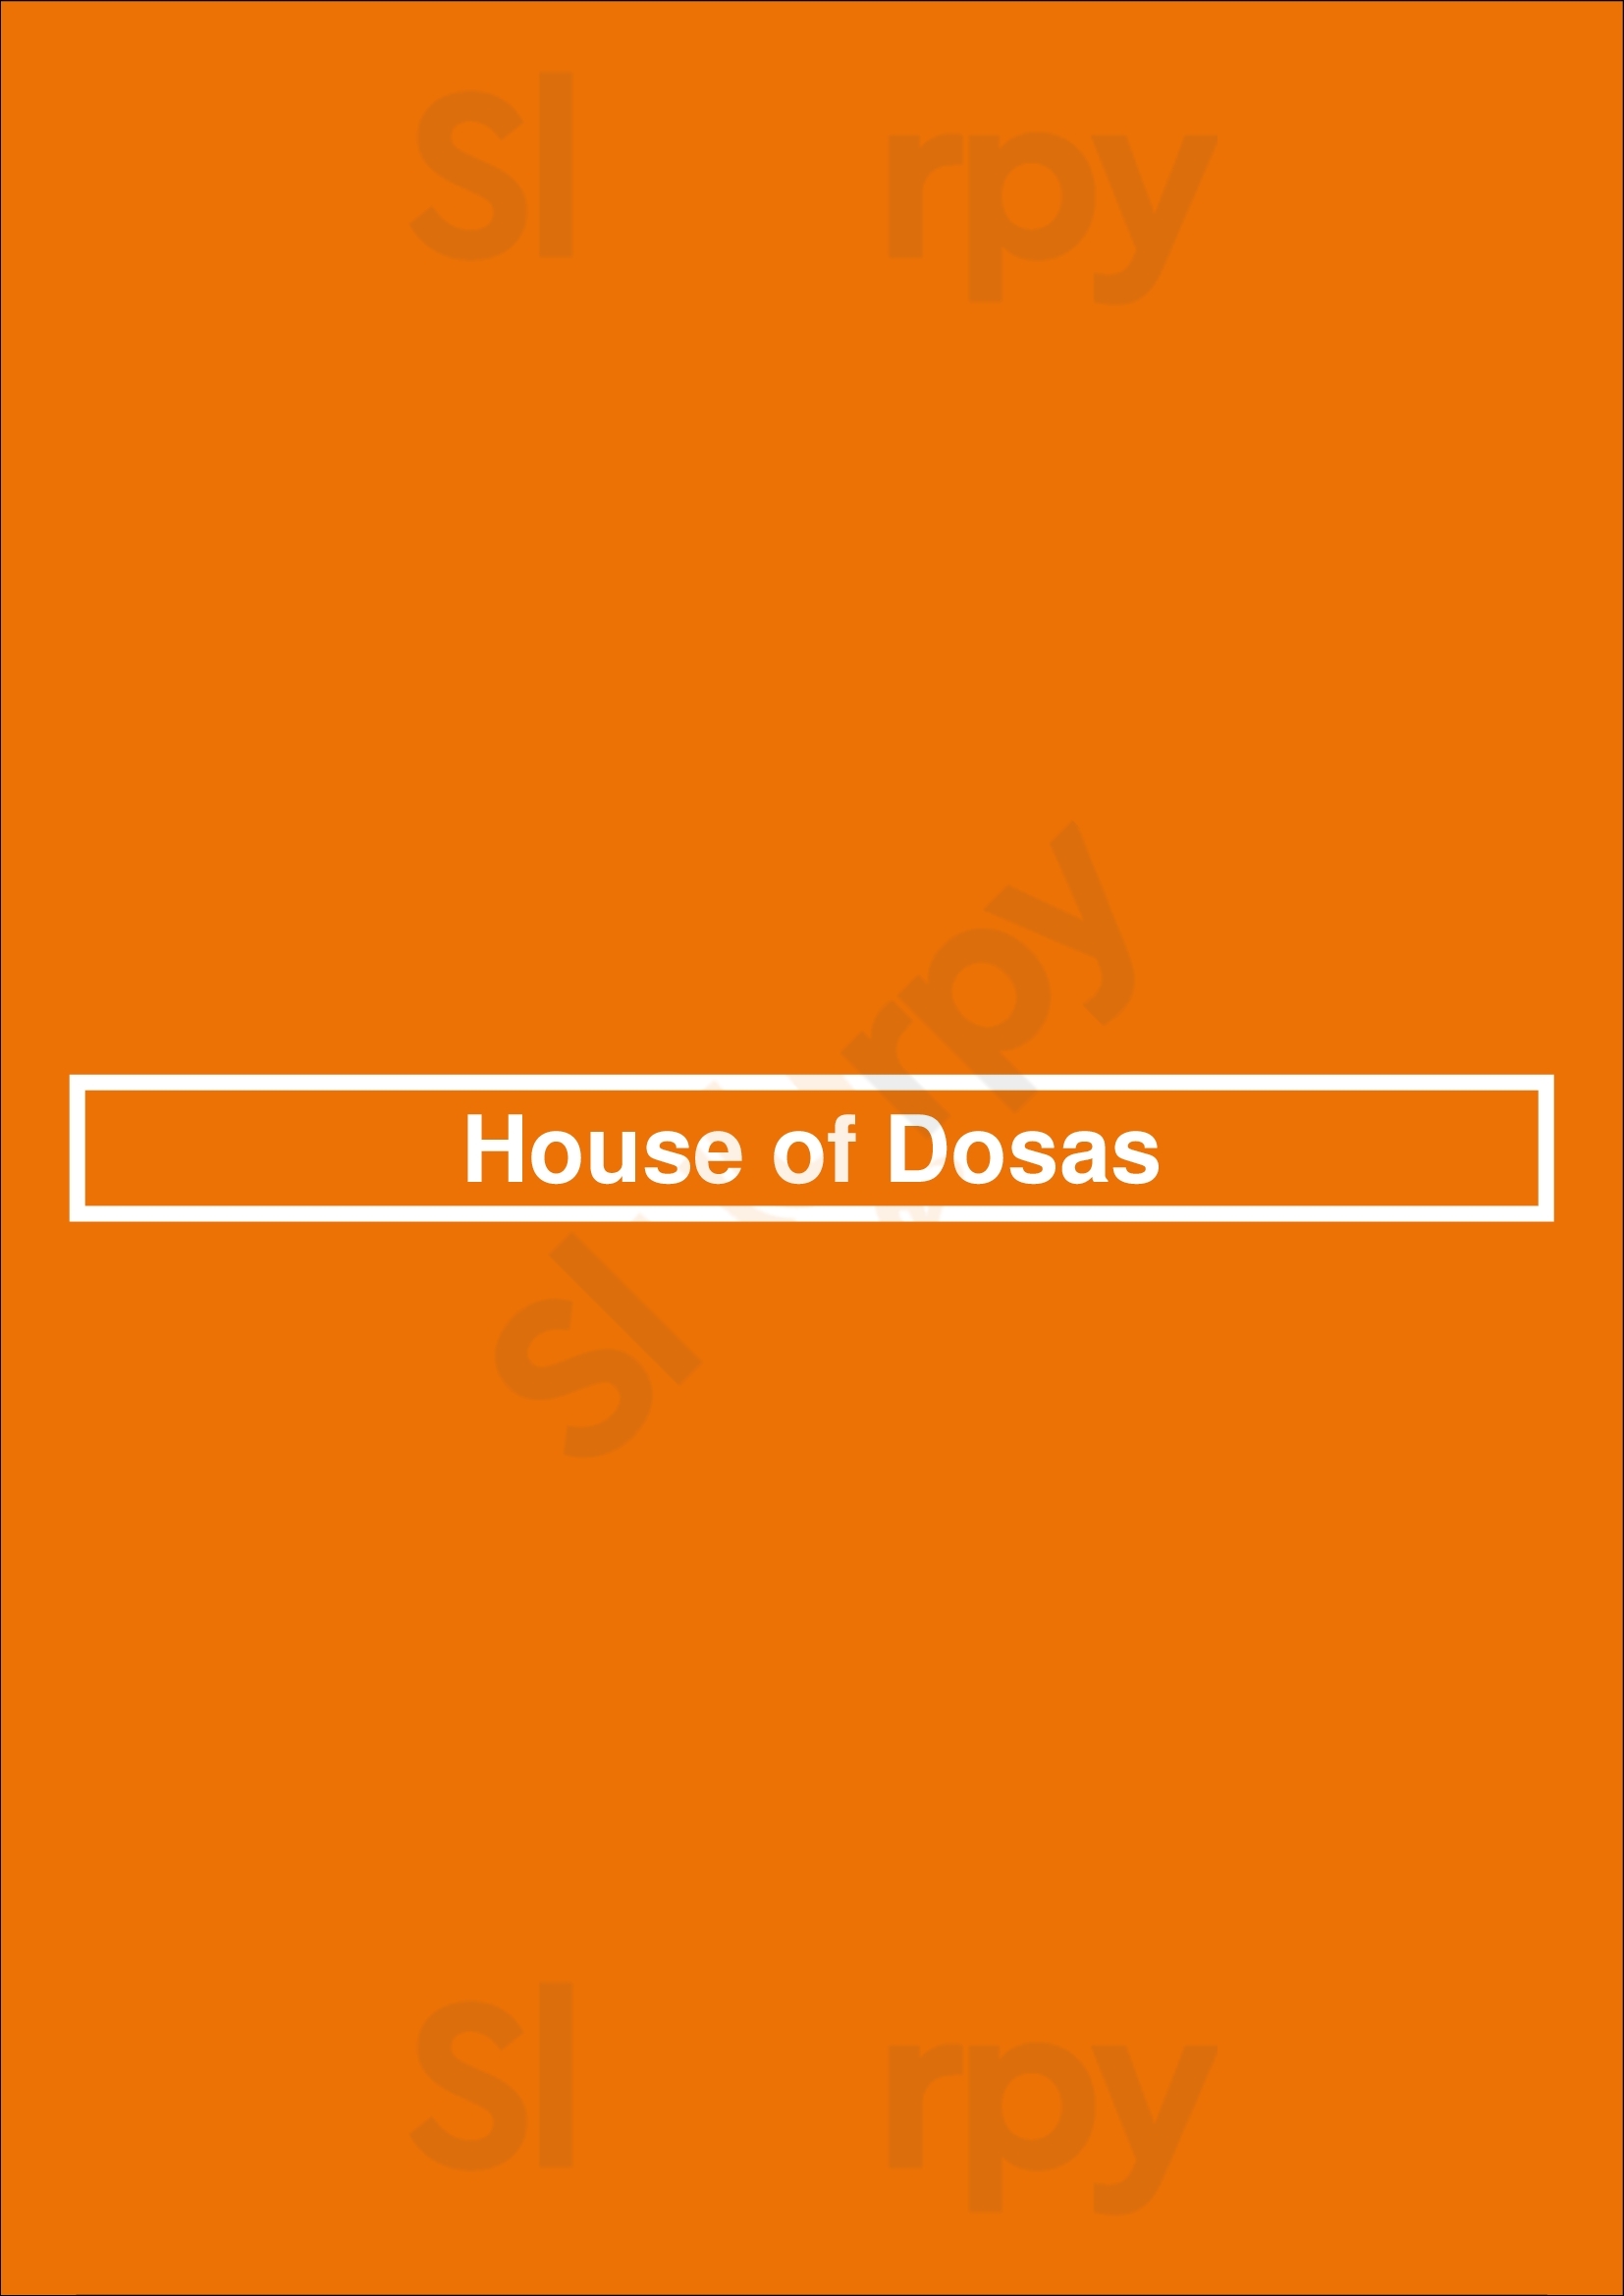 House Of Dosas Vancouver Menu - 1